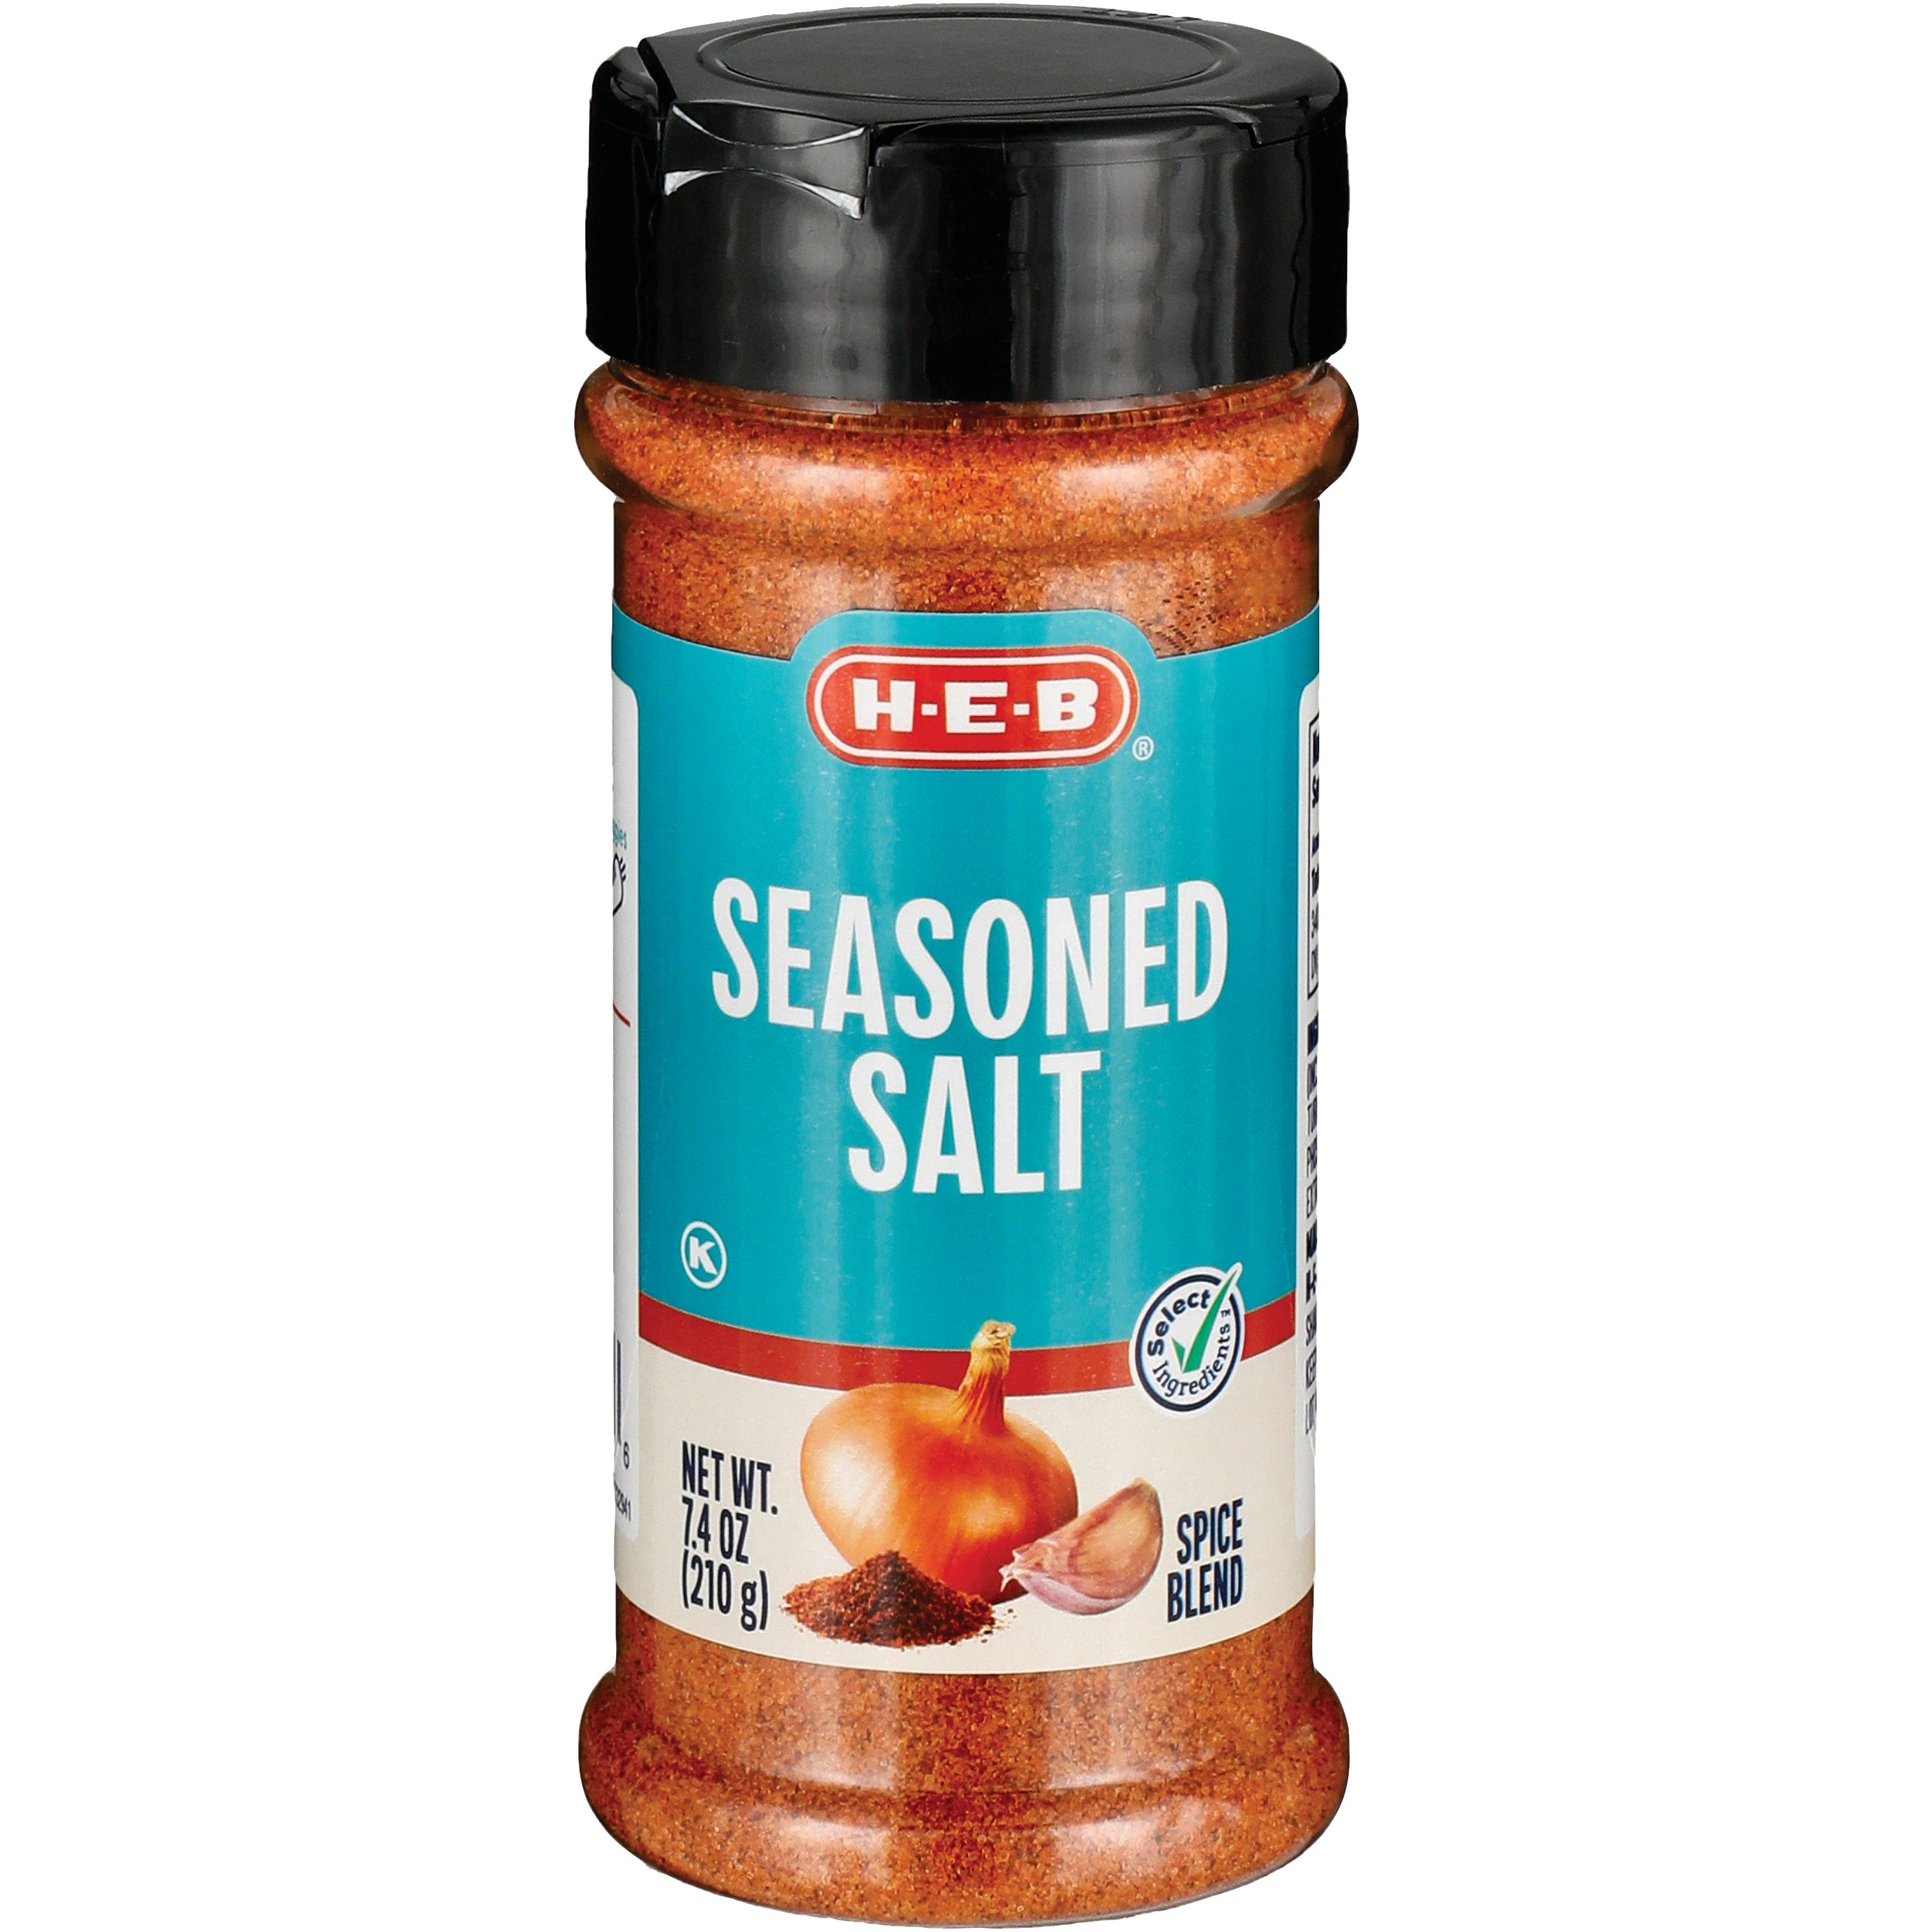 H-E-B Seasoned Salt Spice Blend - Shop Spice Mixes at H-E-B